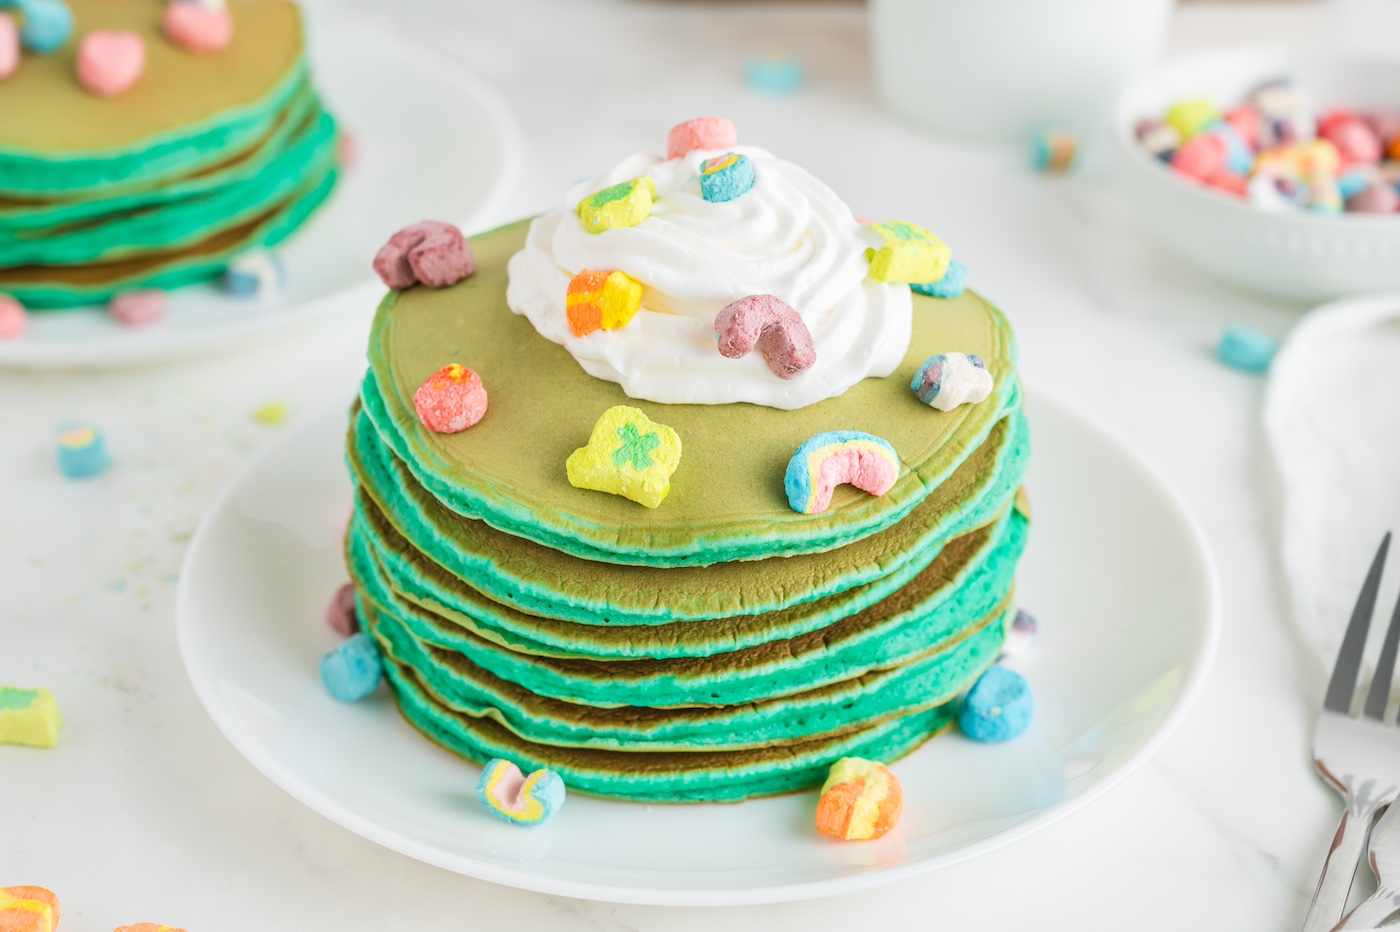 St. Patrick's Day Pancakes